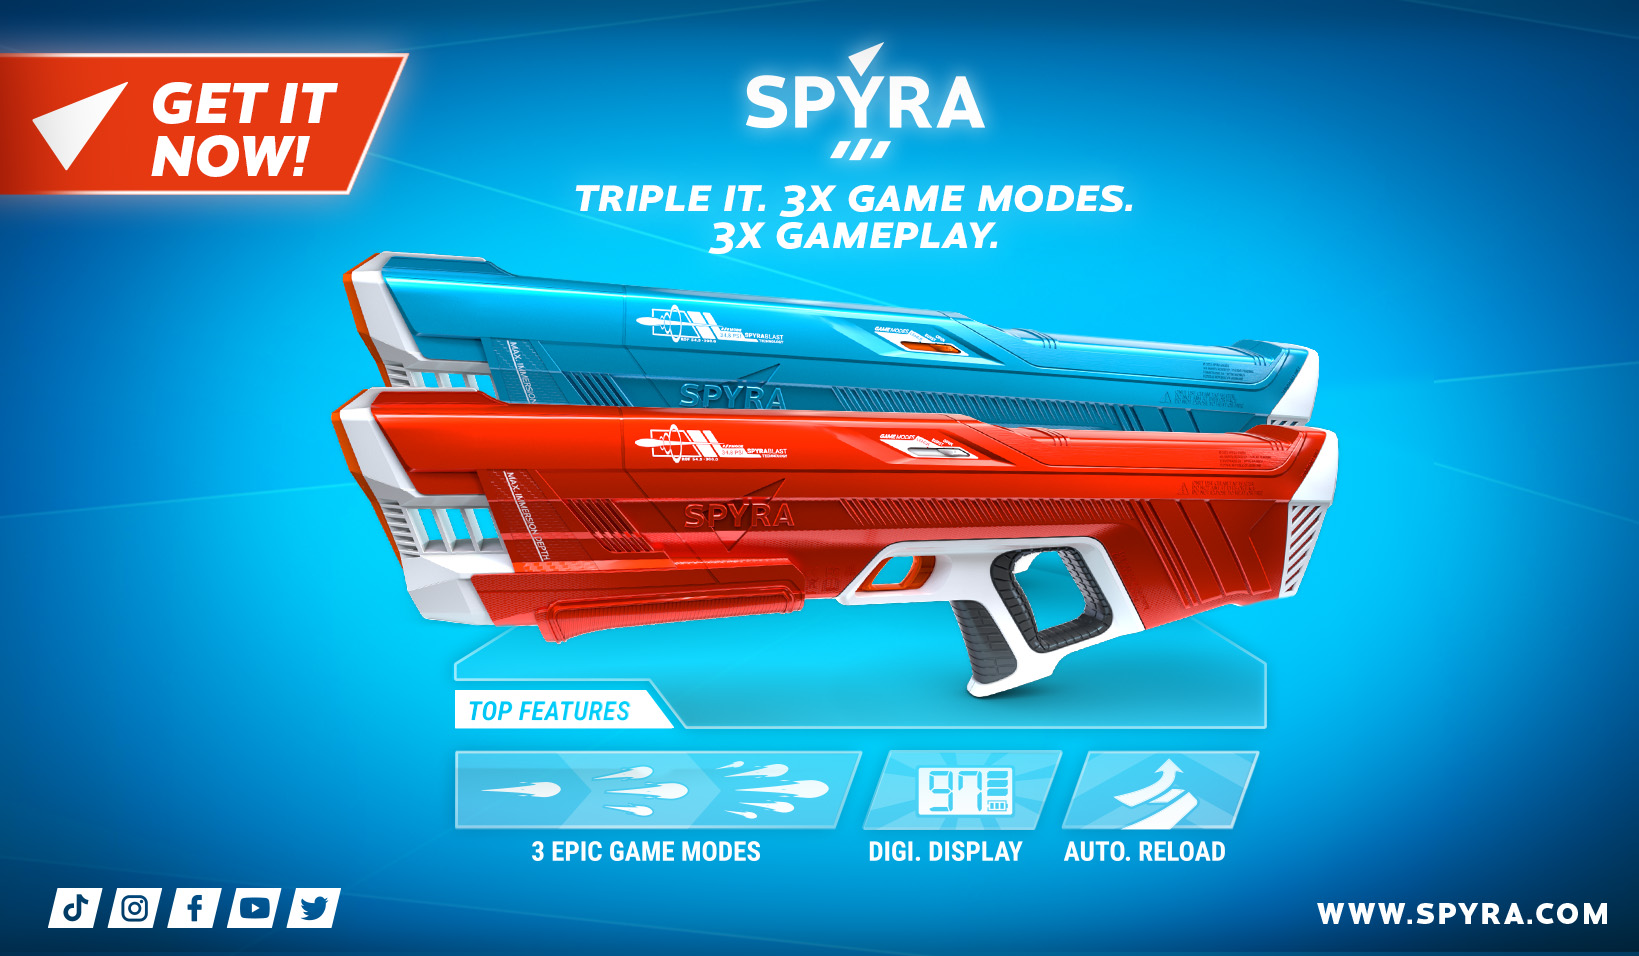 Spyra 3 - SpyraThree - Gamereactor